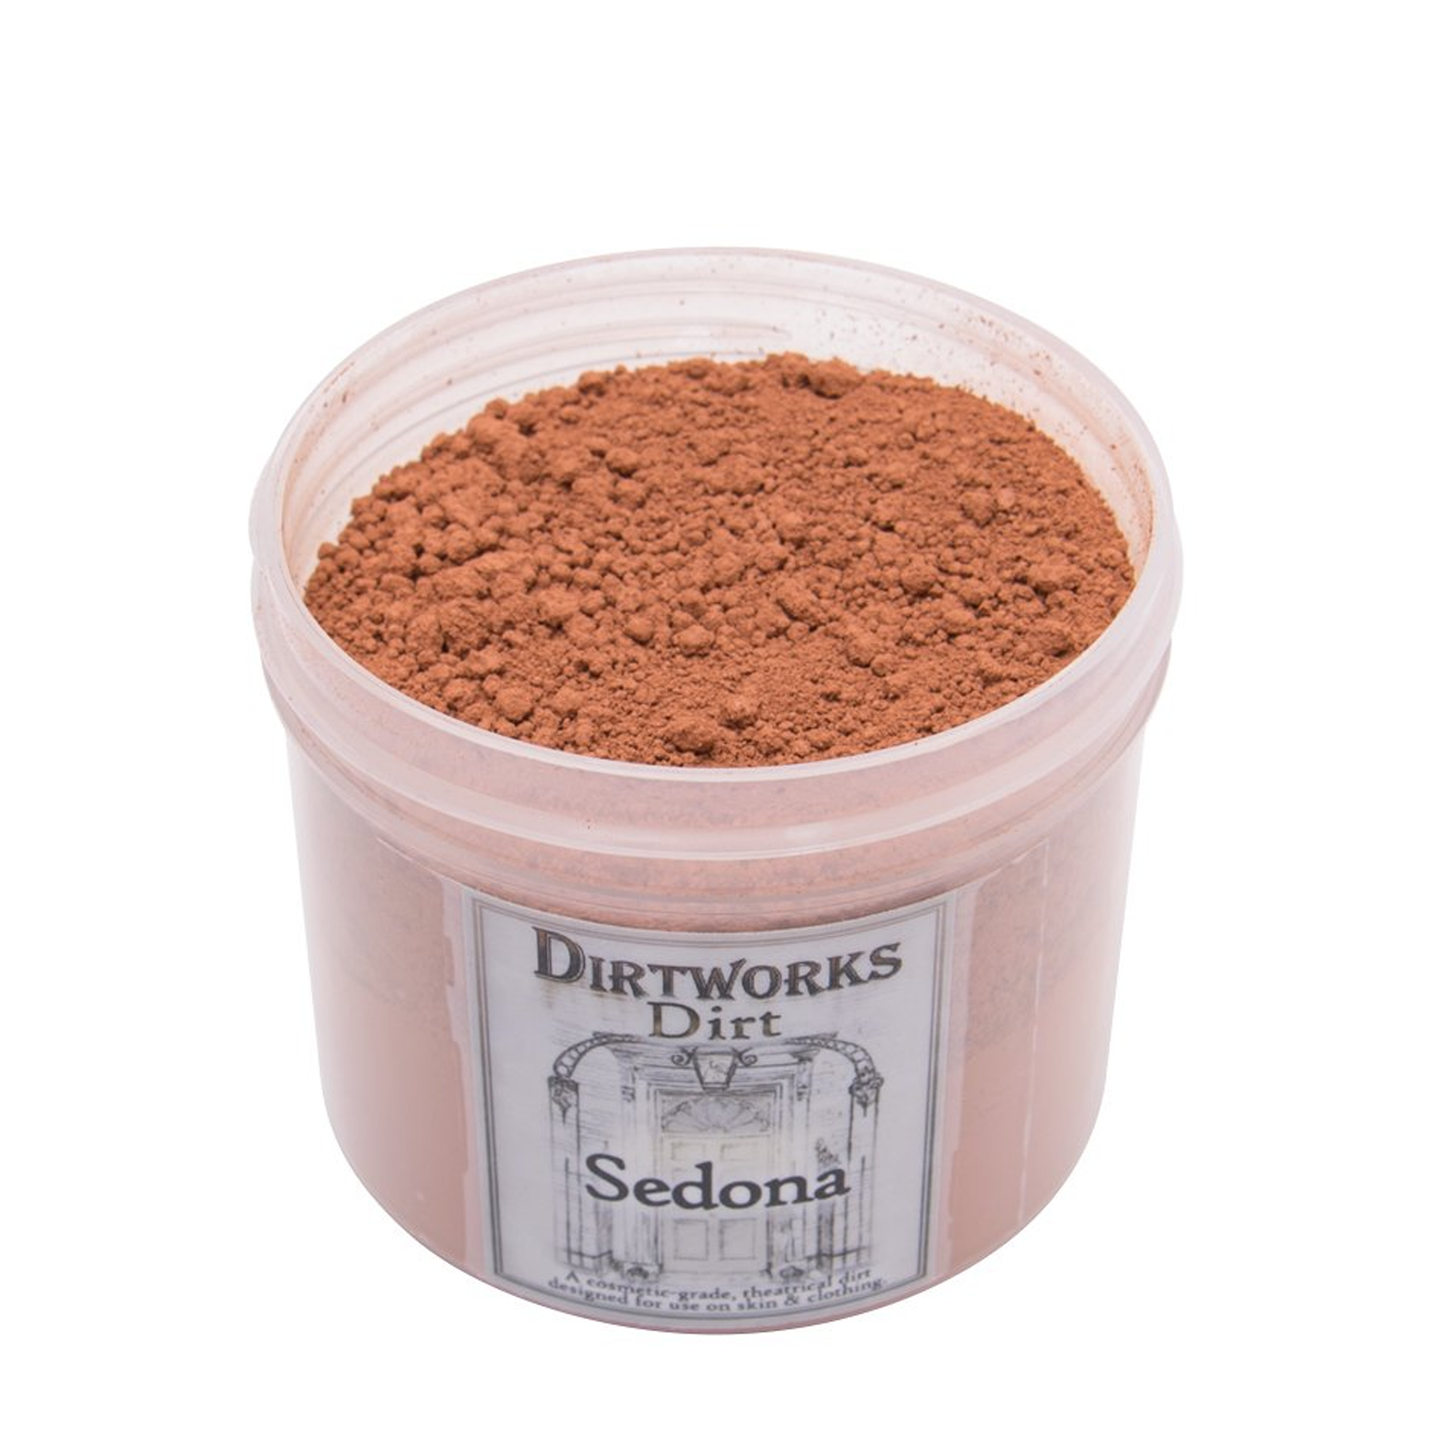 Dirtworks Powders